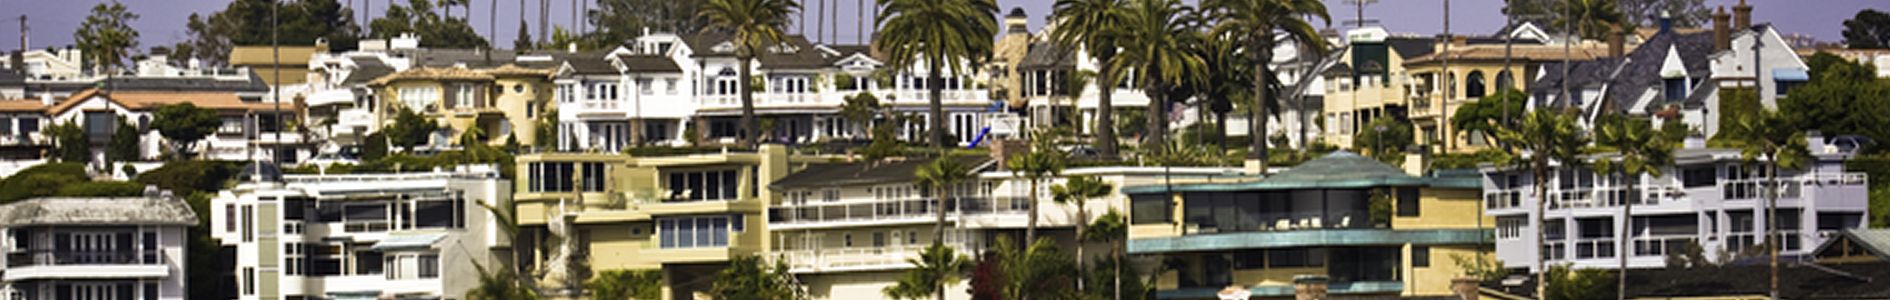 Investment Appraisals Southern California Appraisals